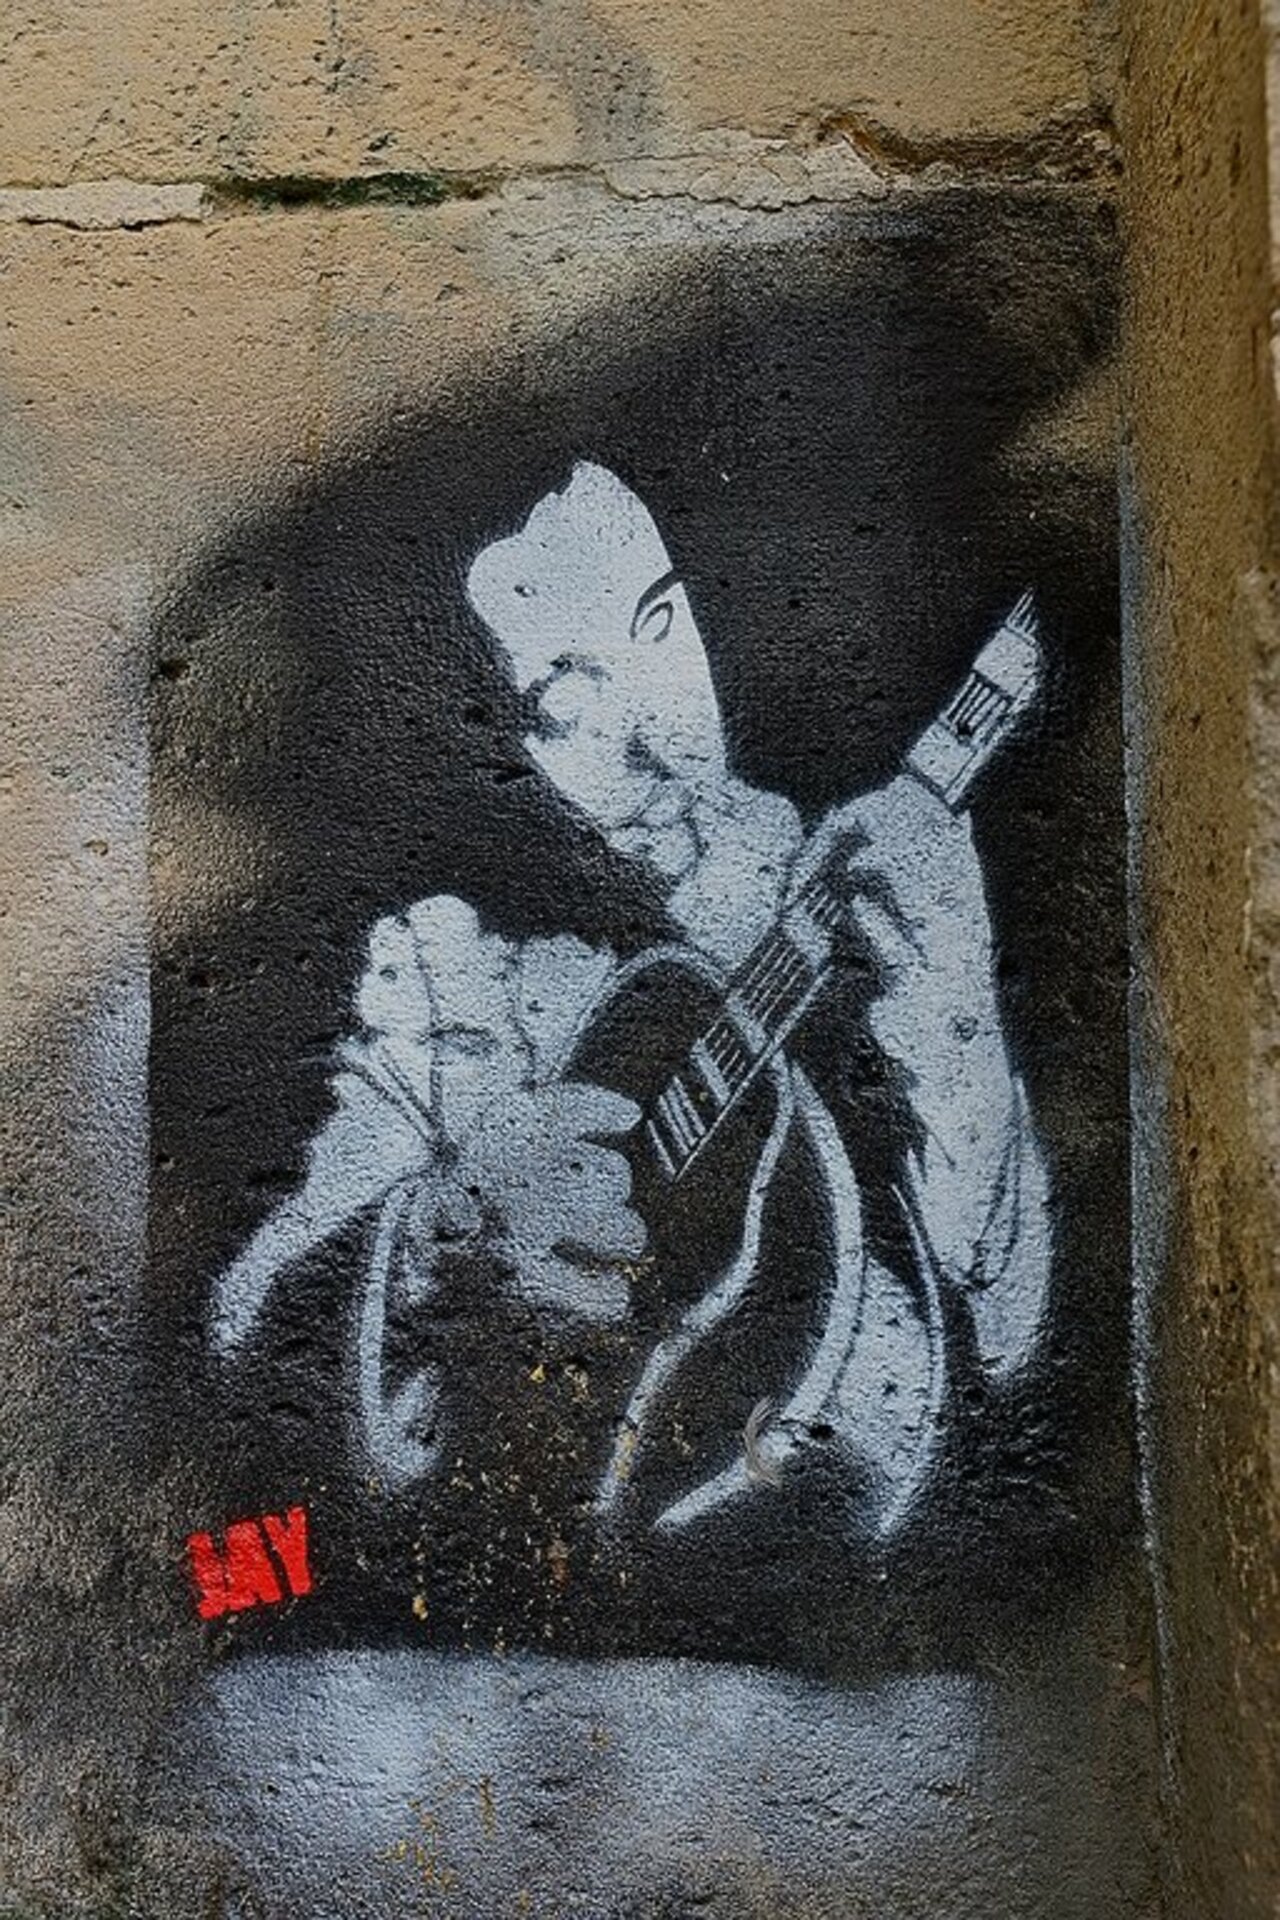 Street Art by anonymous in #Paris http://www.urbacolors.com #art #mural #graffiti #streetart https://t.co/9sQ60ioI1t